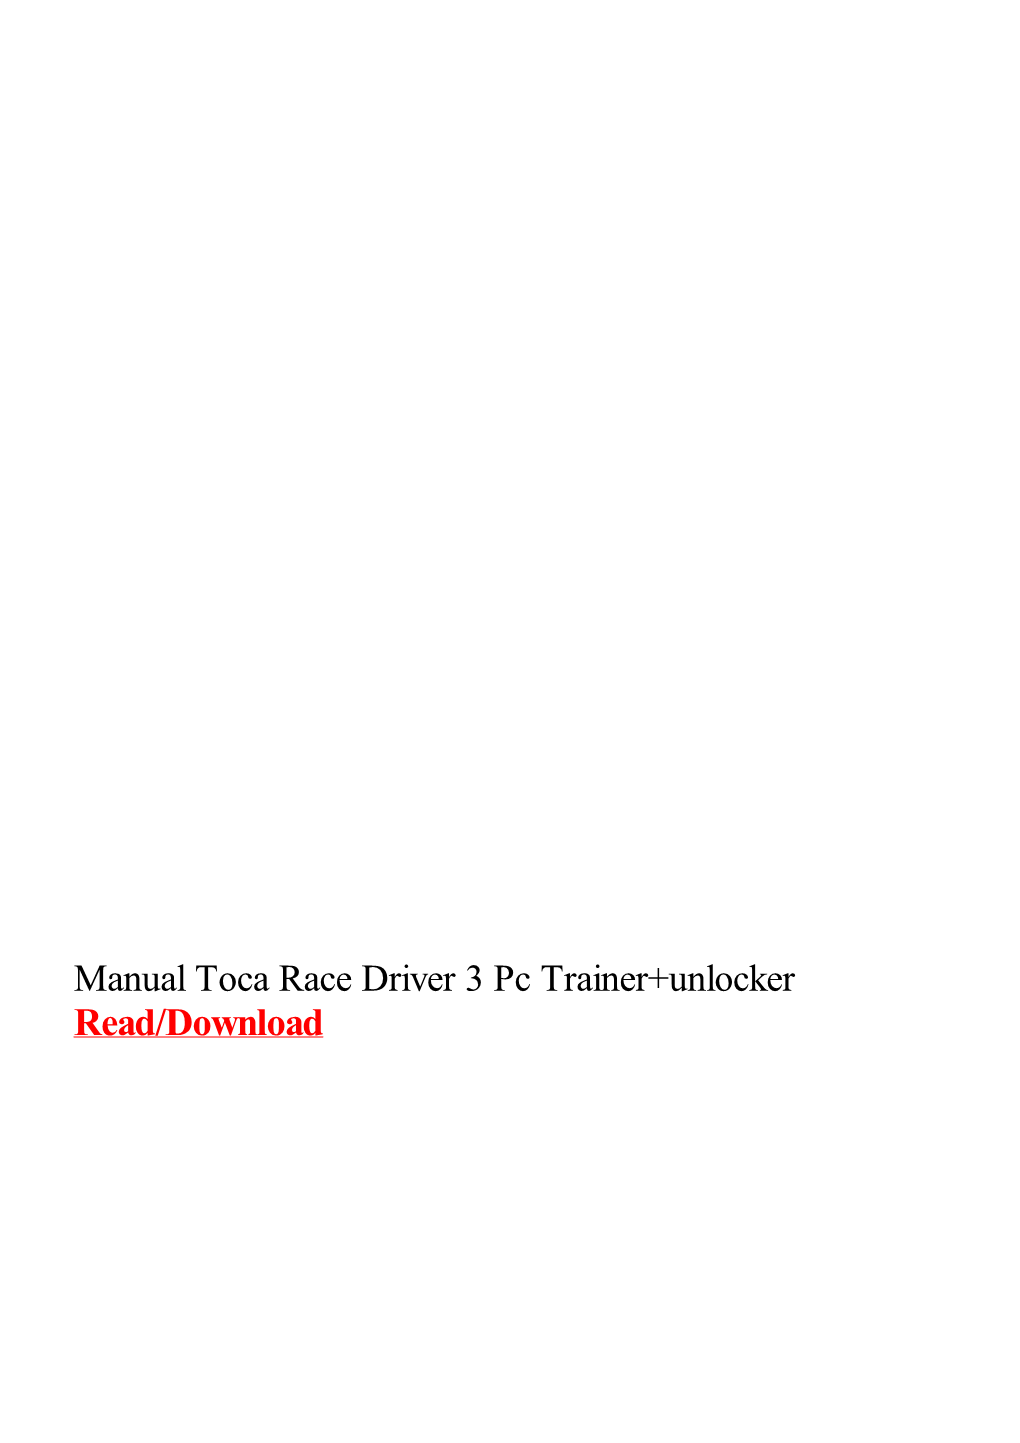 Manual Toca Race Driver 3 Pc Trainer+Unlocker